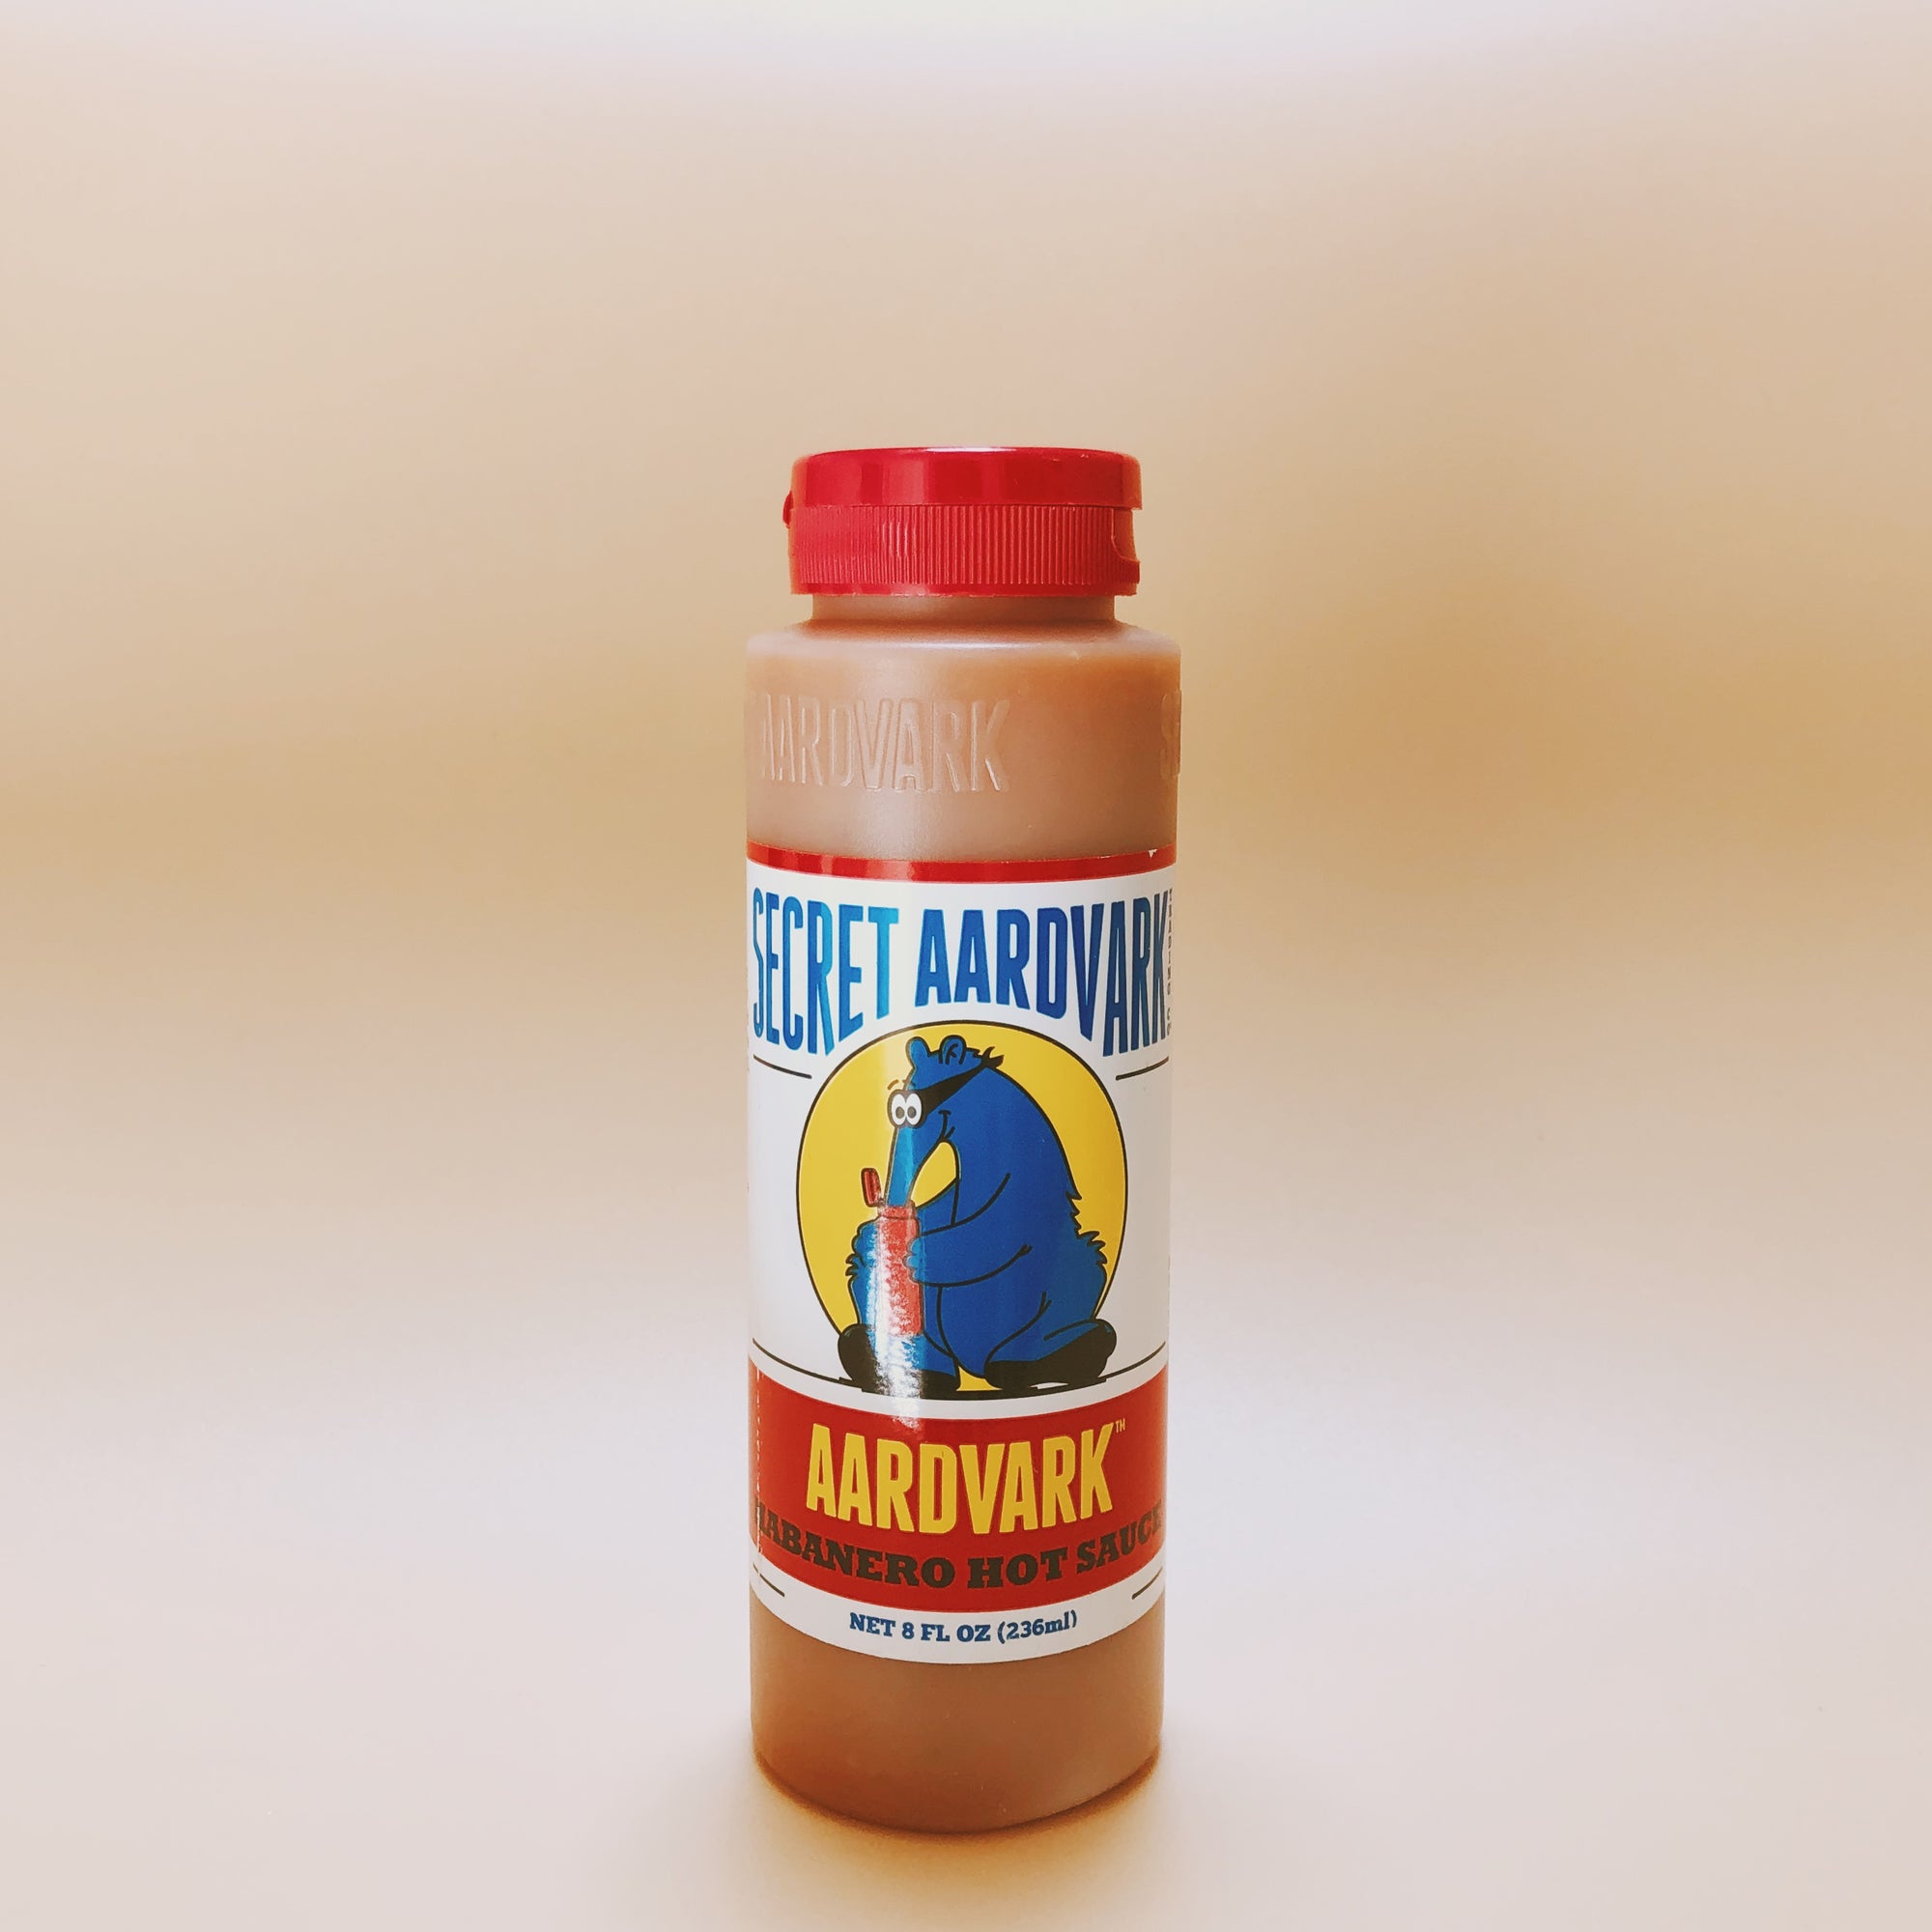 Aardvark Habnero Hot Sauce